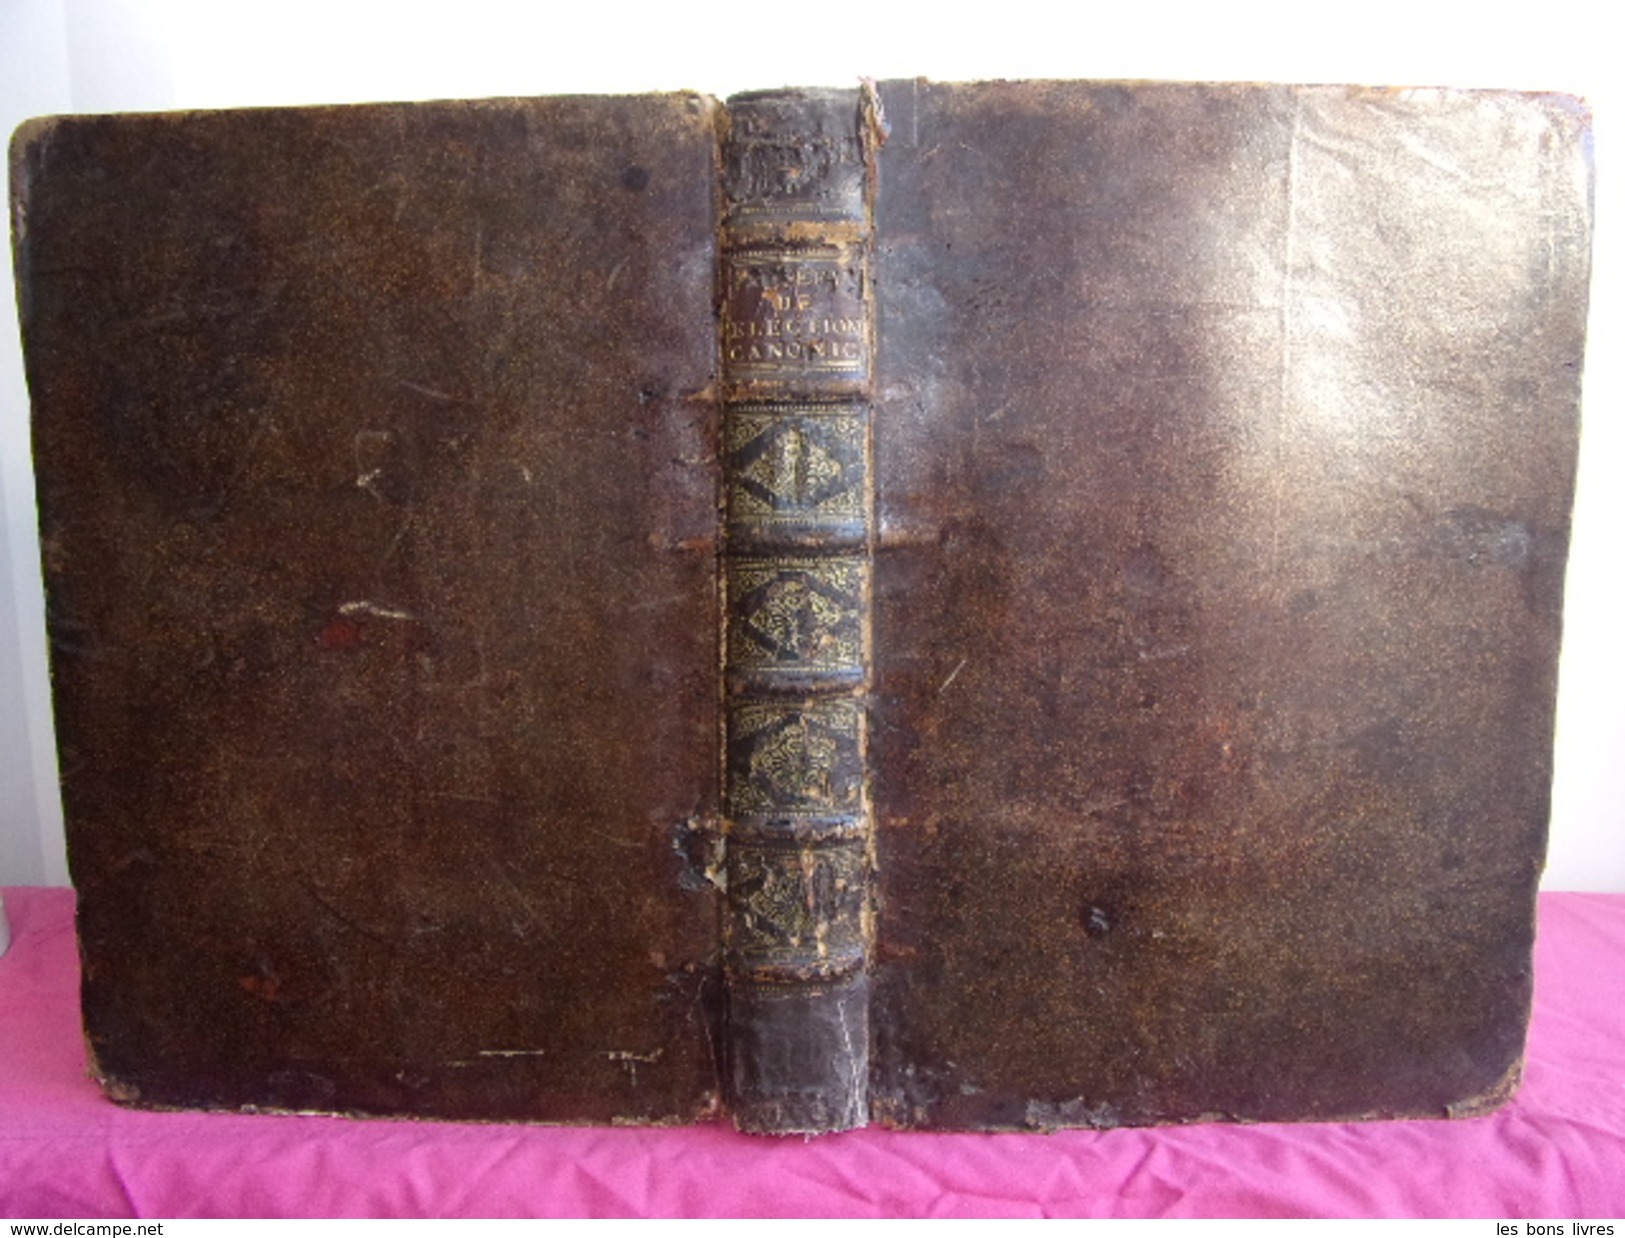 PASSERINI DE SEXTVLA. TRACTATUS DE ELECTIONE CANONICA IN QVO In Folio 1643 Rare - Tot De 18de Eeuw